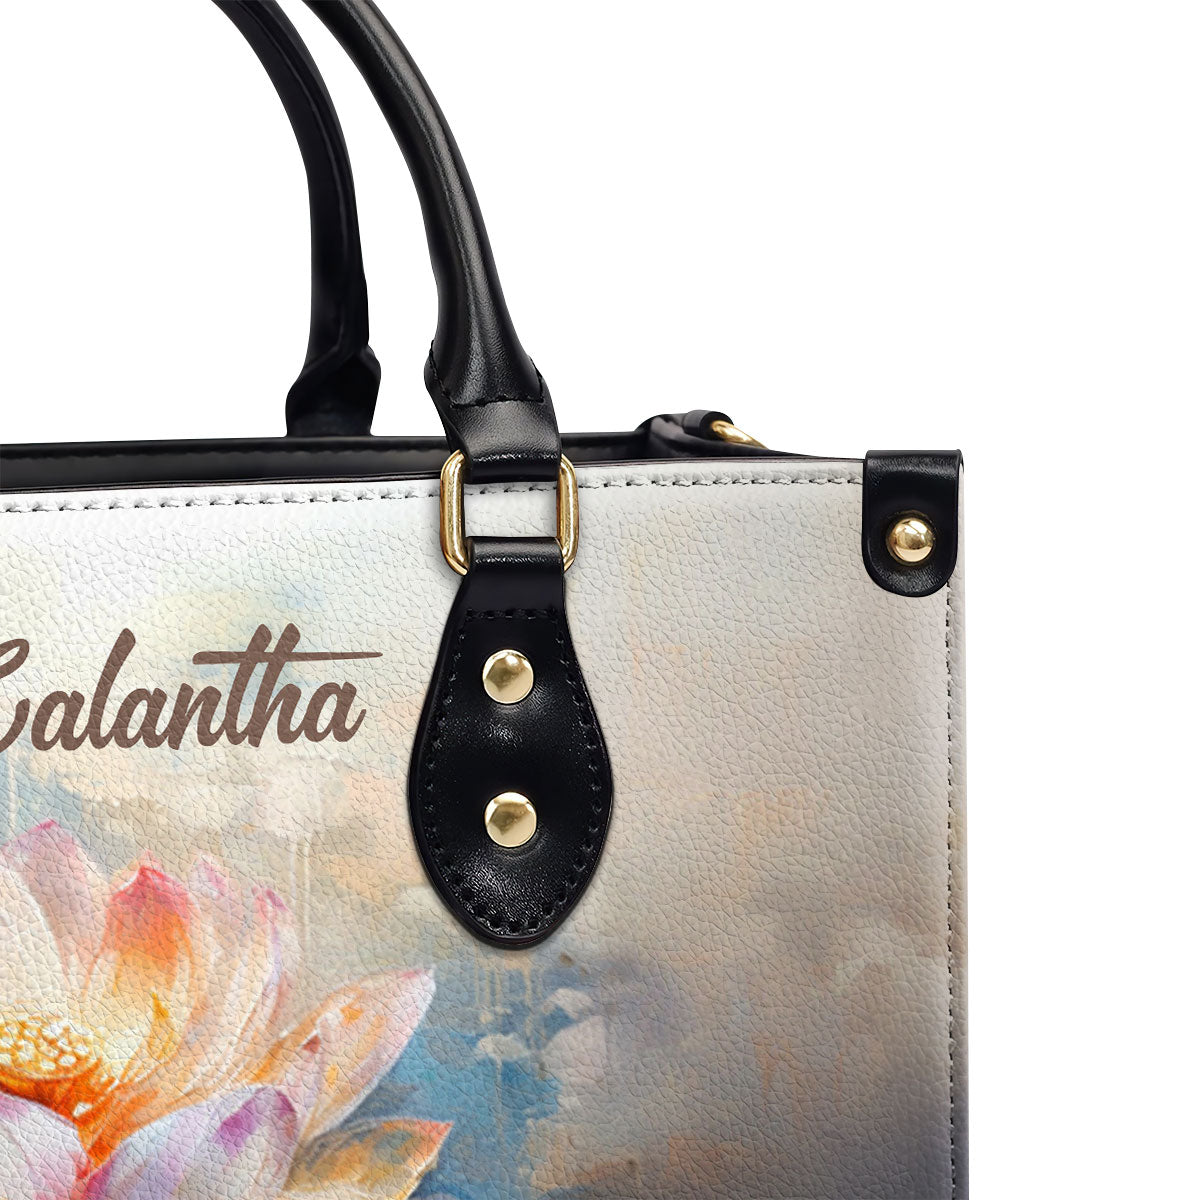 Blooming Lotus - Personalized Leather Handbag MS-NH17